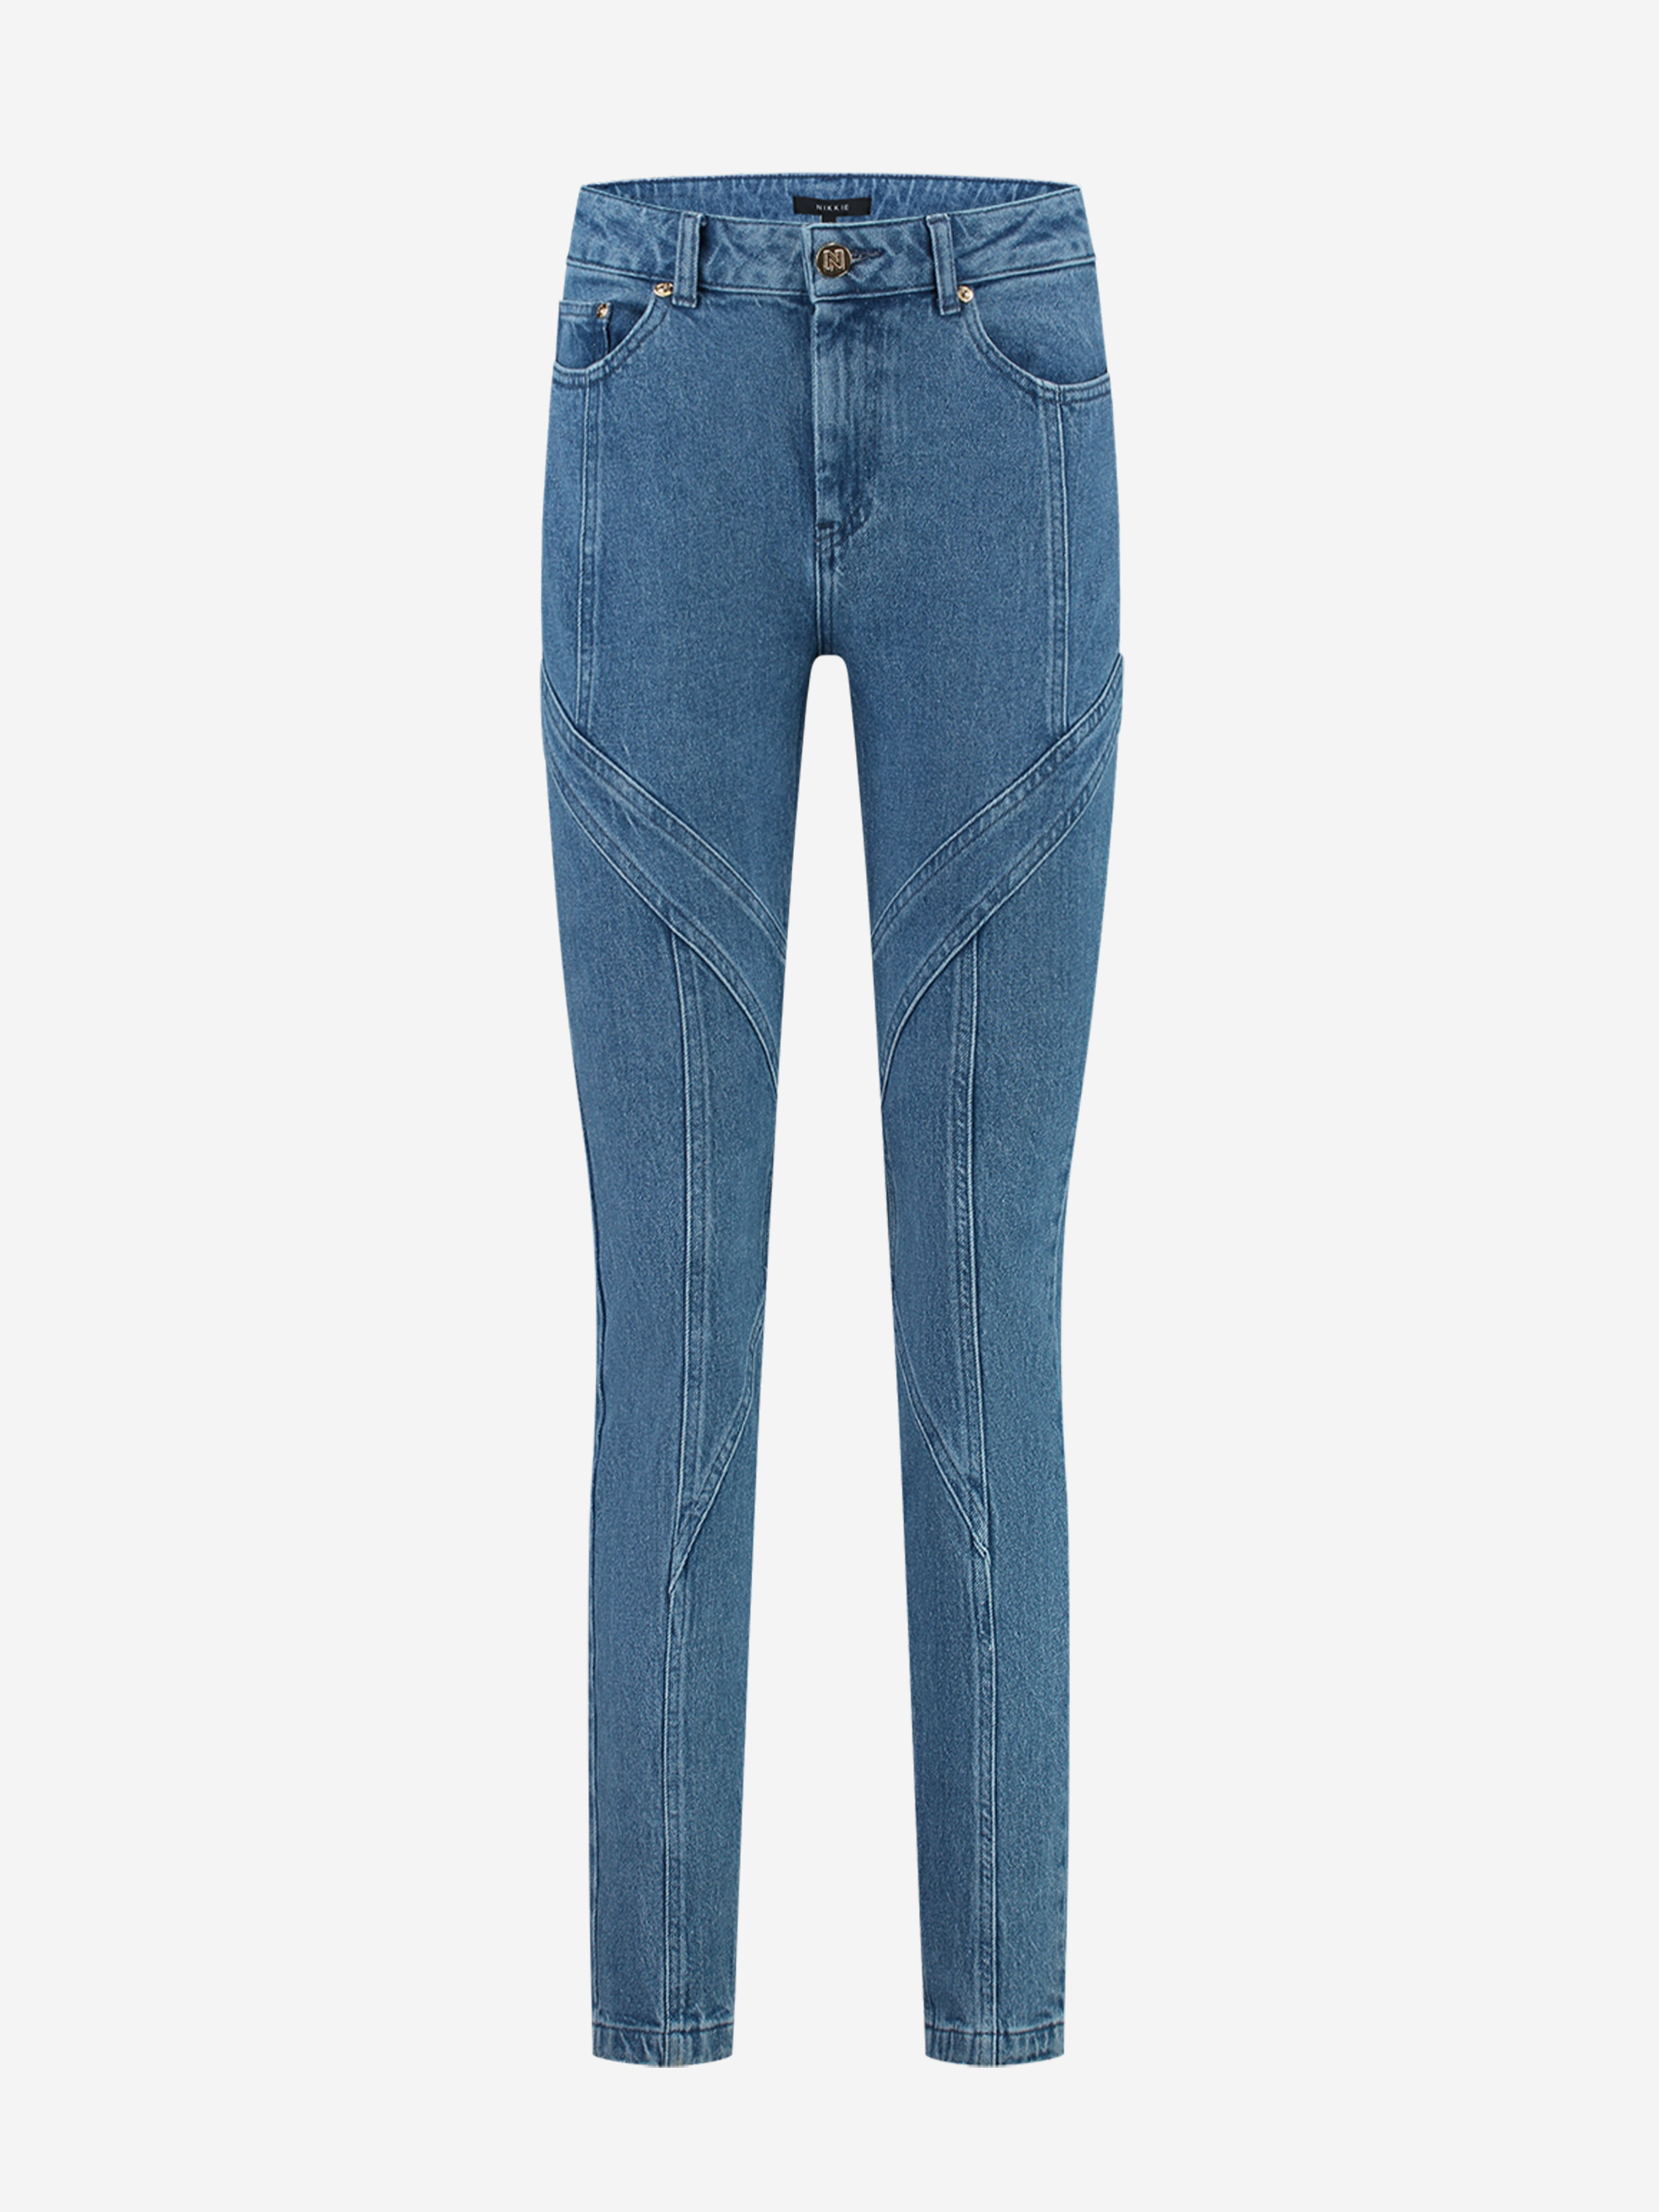 Skinny jeans met lijn detail